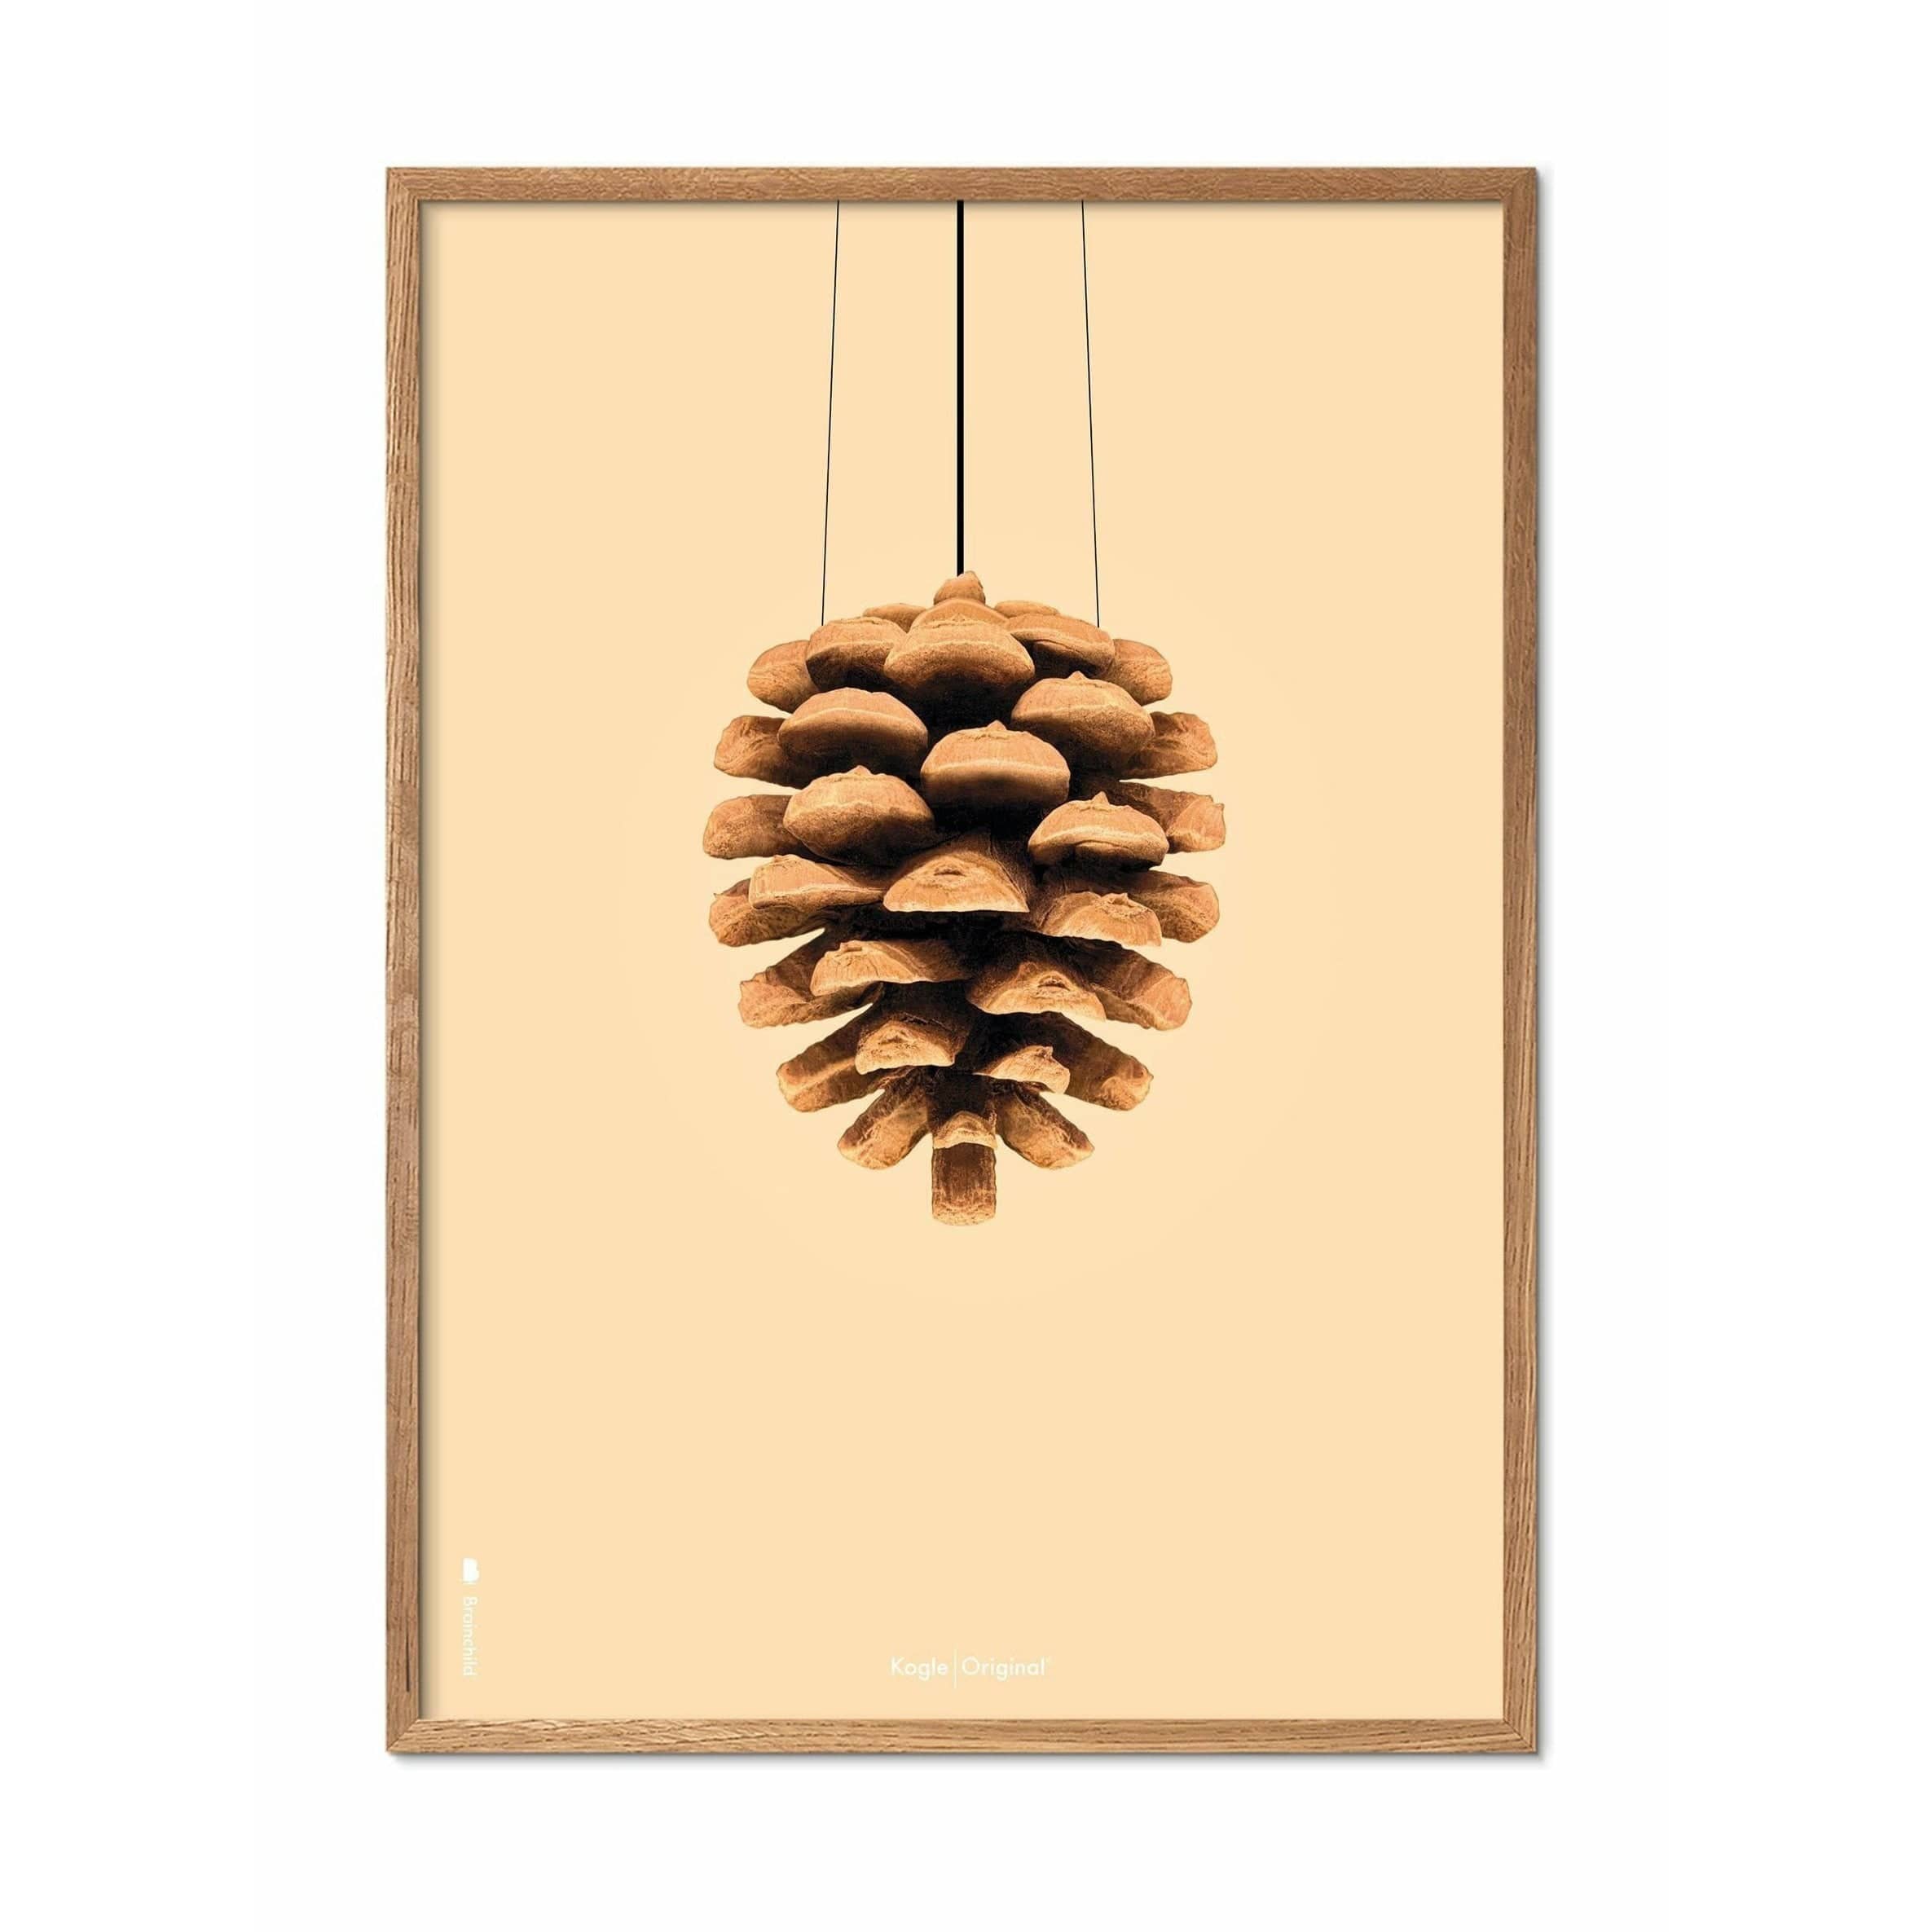 Póster clásico de cono de pino de creación, marco hecho de madera clara de 70x100 cm, fondo de color arena